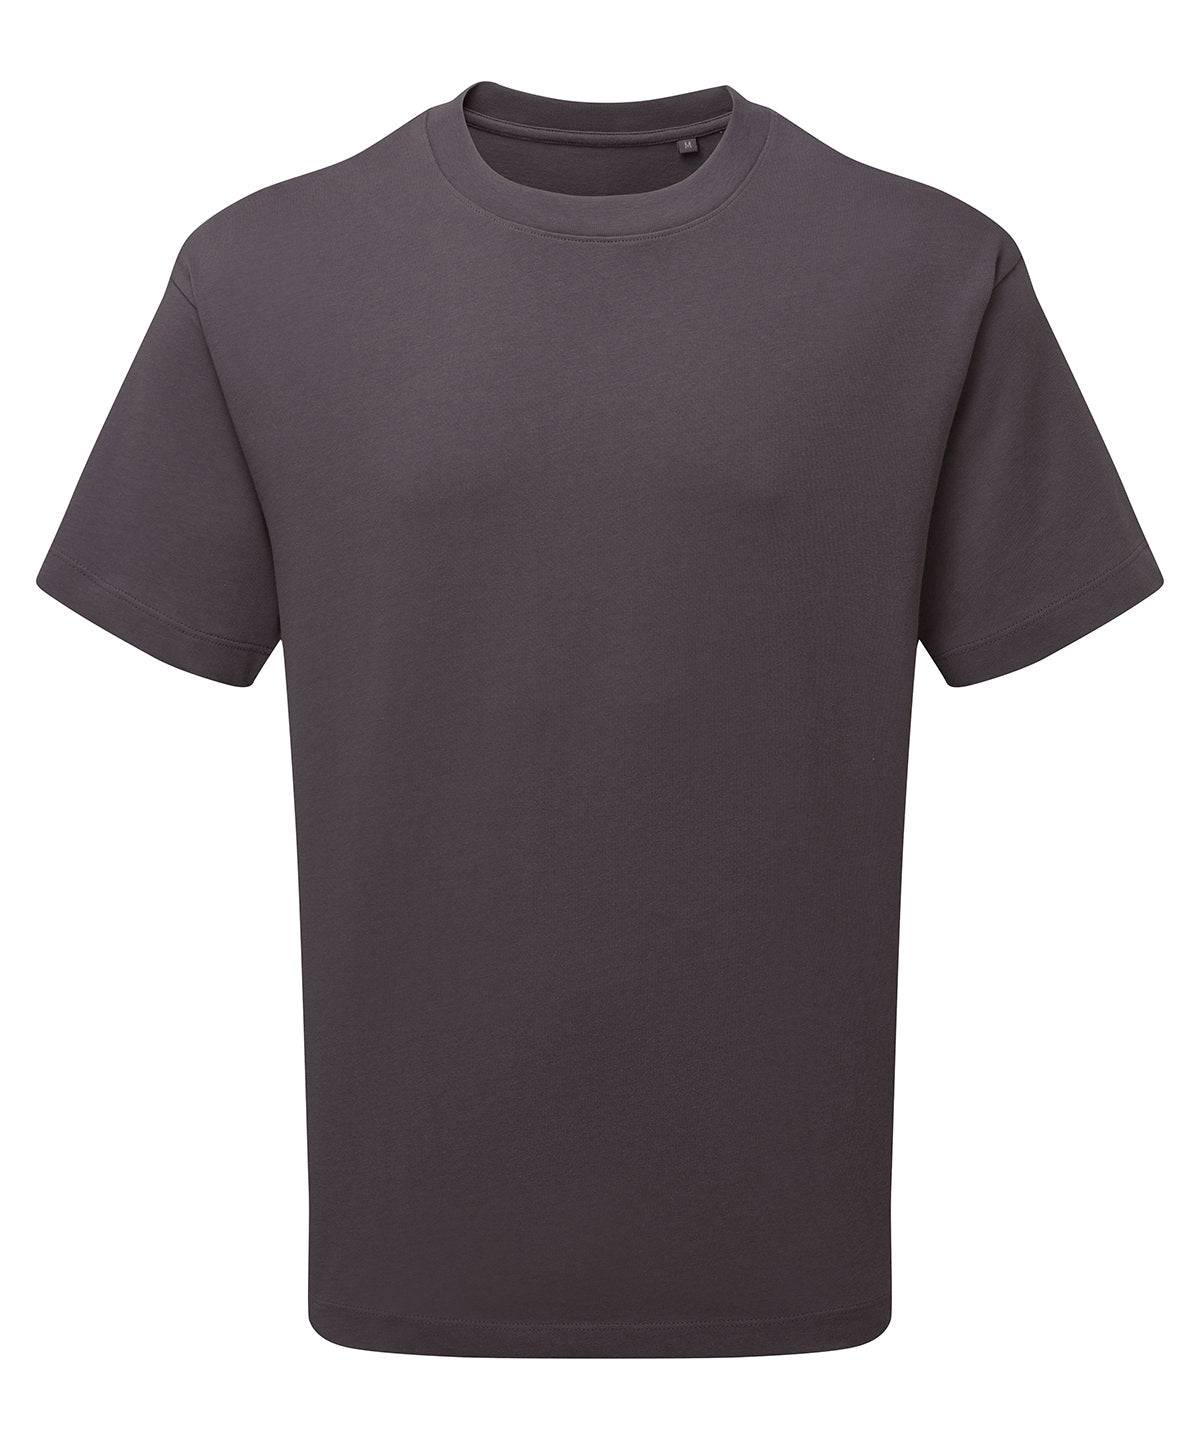 Charcoal - Anthem heavyweight t-shirt